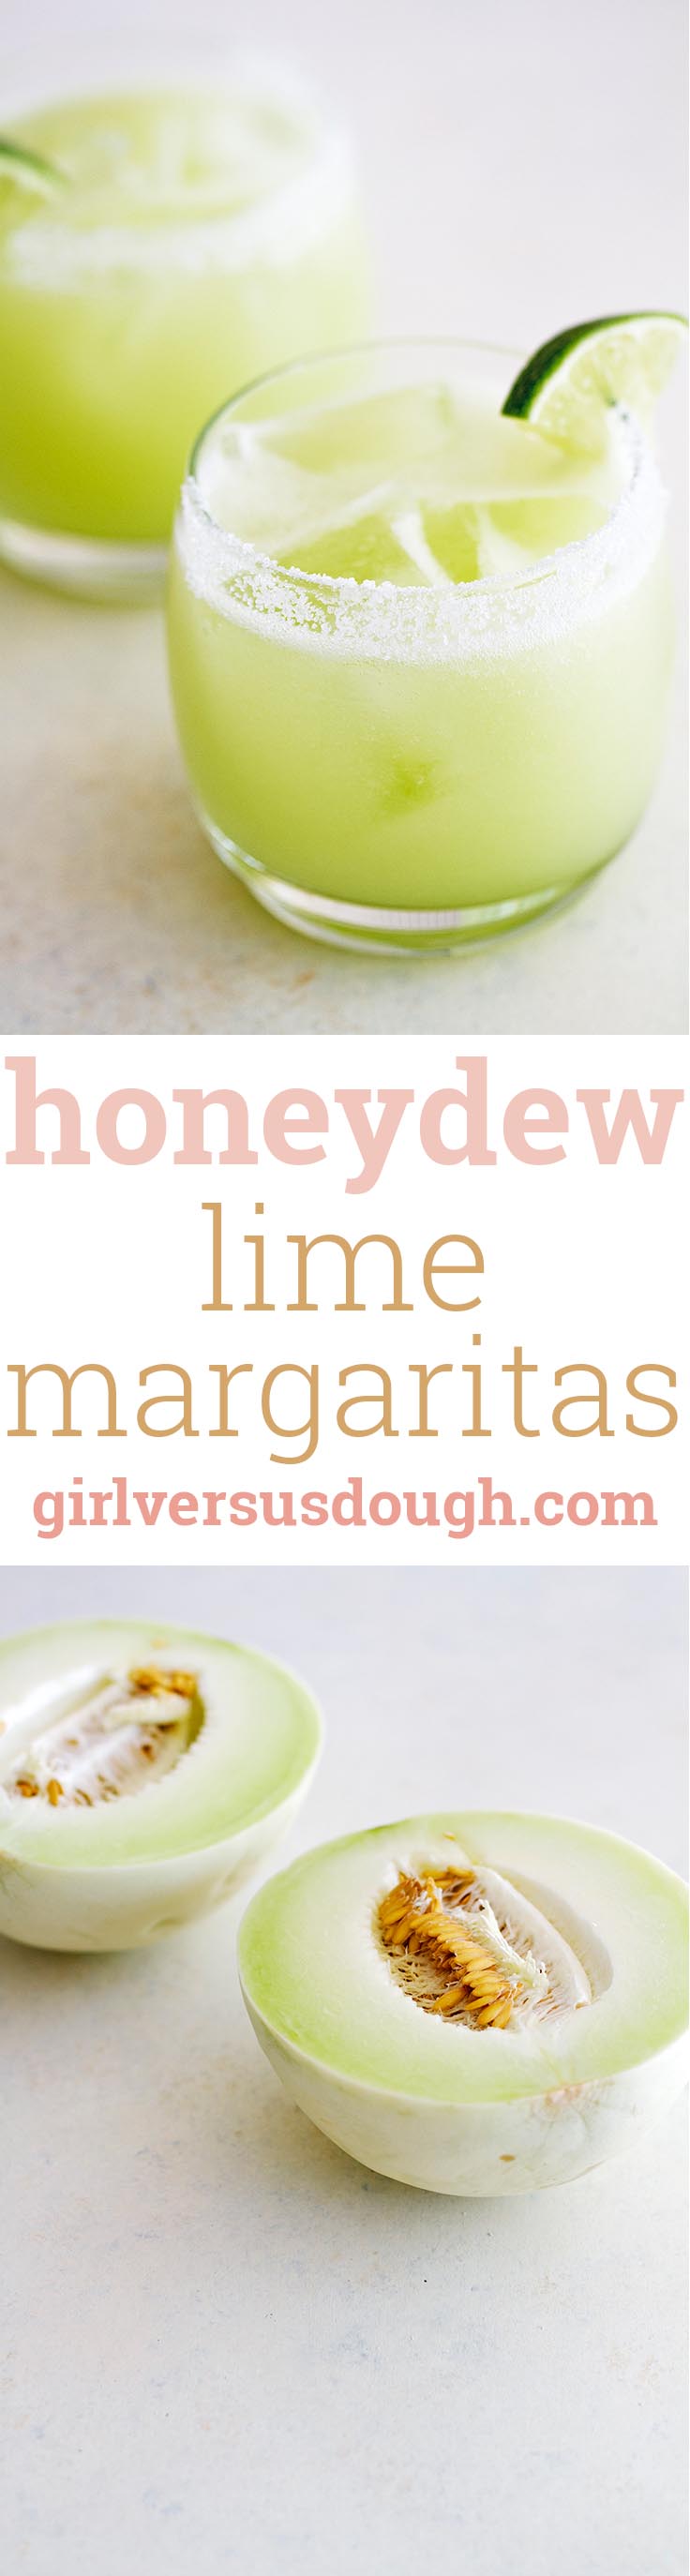 Honeydew Lime Margaritas -- Honeydew melon puree and lime juice make this margarita extra refreshing and delicious! www.girlversusdough.com @girlversusdough